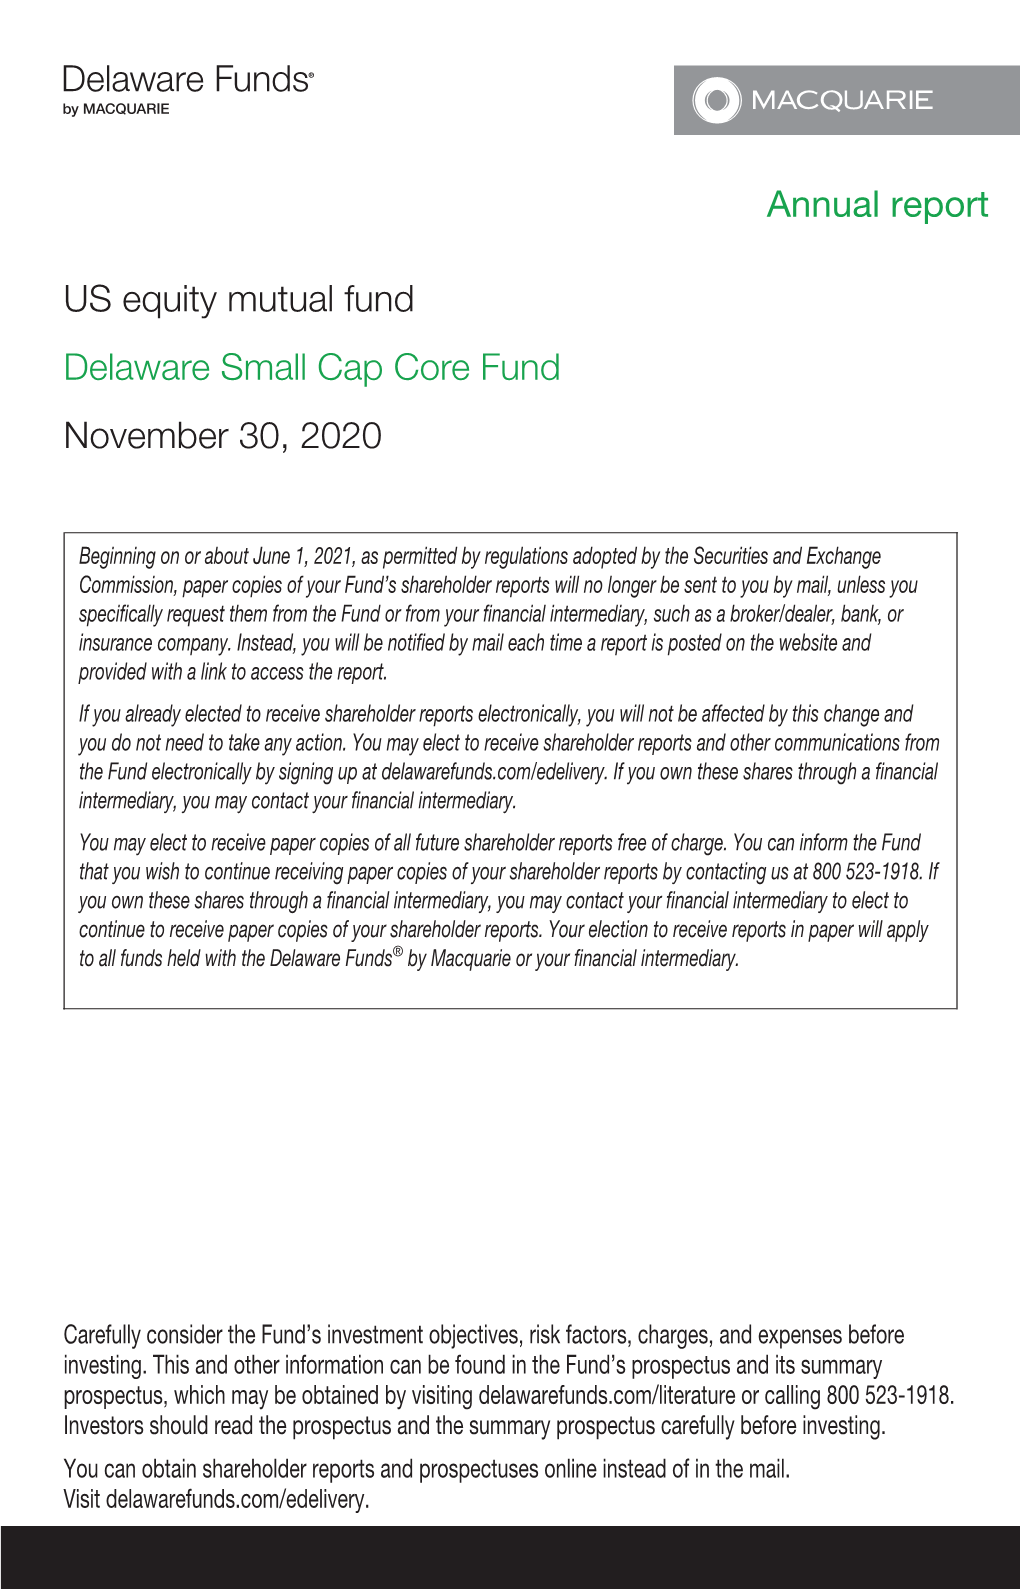 Annual Report US Equity Mutual Fund Delaware Small Cap Core Fund November 30, 2020